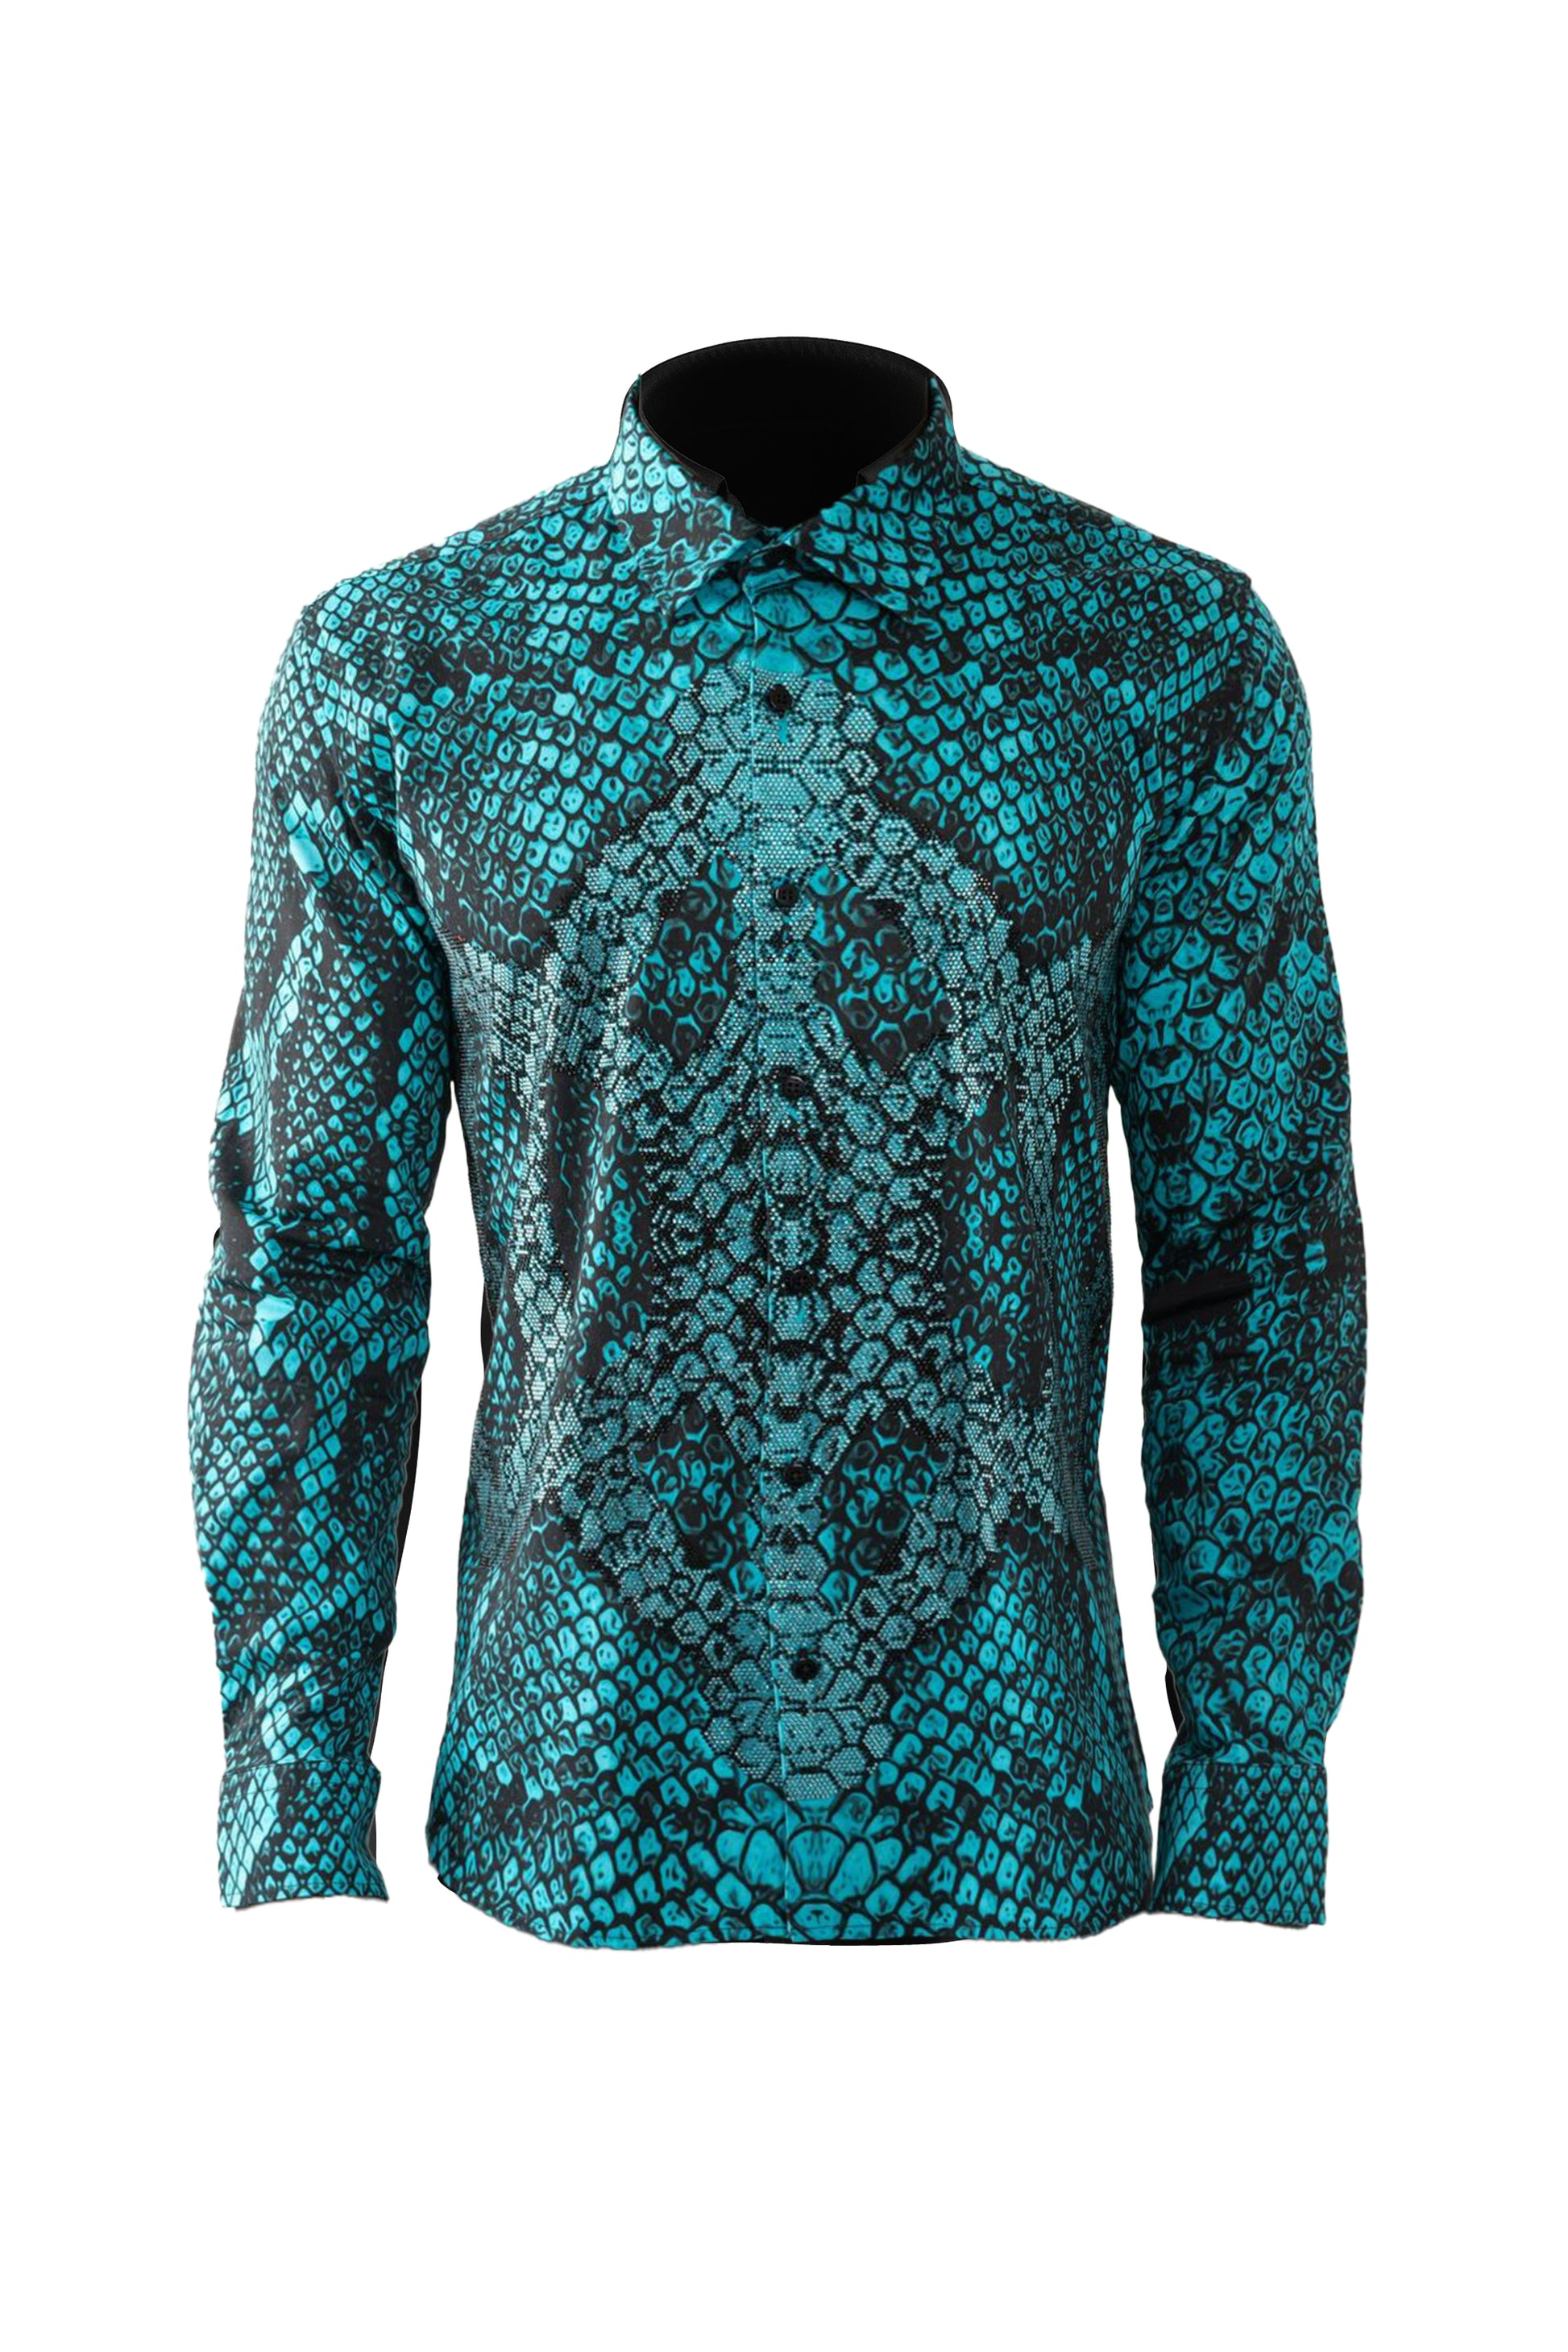 Azure Serpentis Button-Up Shirt CASUAL SHIRT On Sale 30% Off Vercini